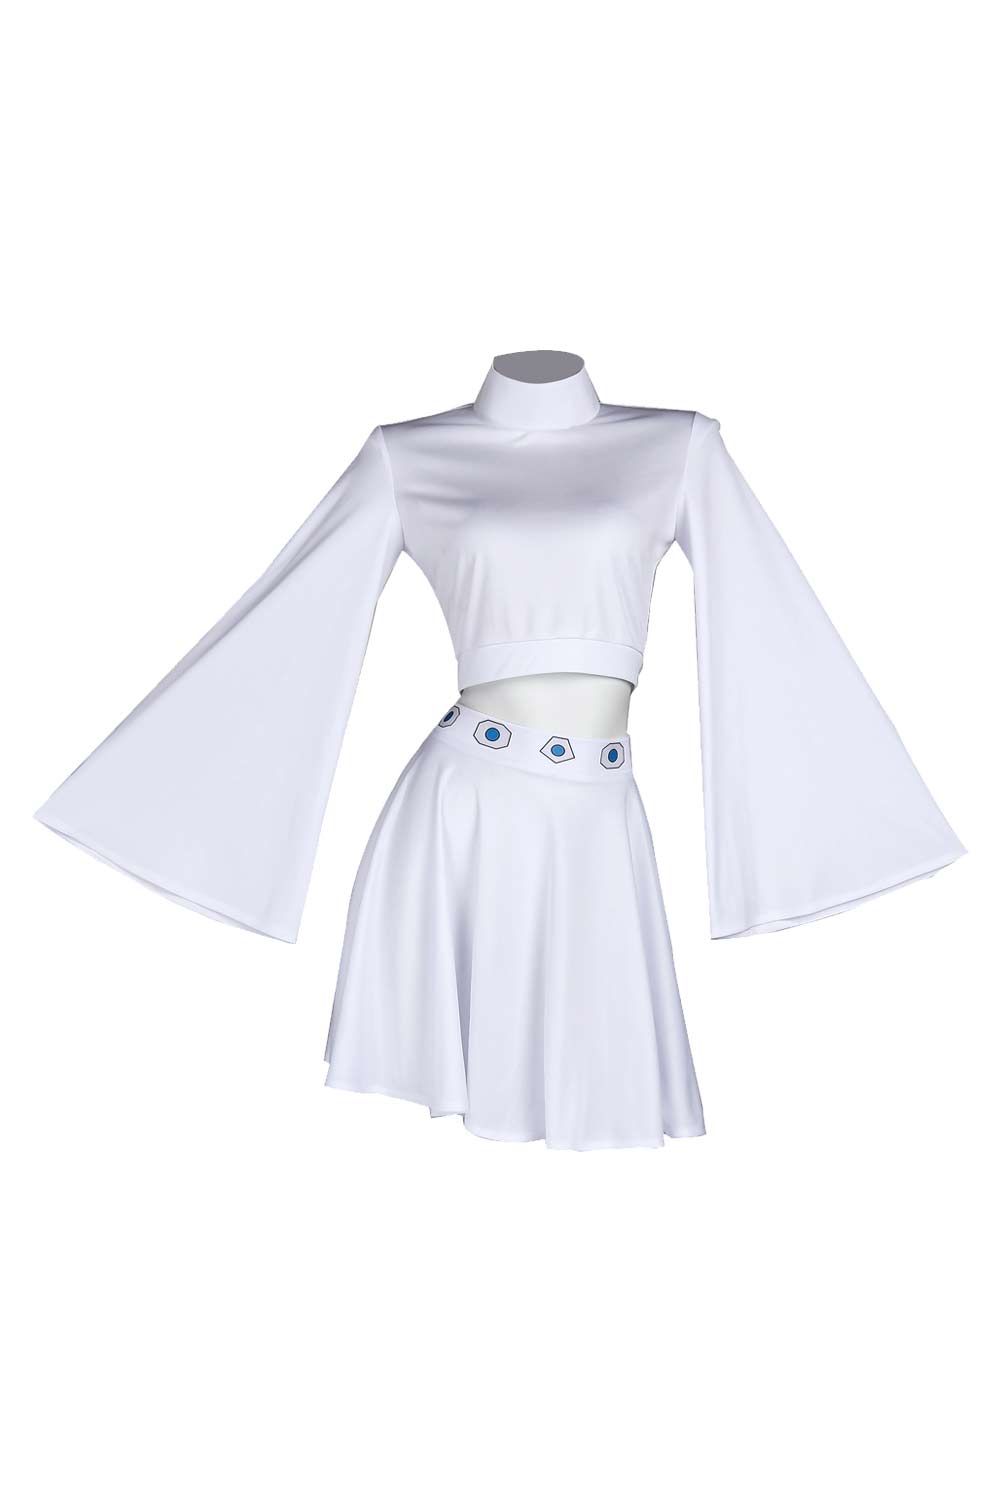 Movie Princess Leia White Top Skirt Set Dress Outfits Halloween Carnival Suit Cosplay Costume Original Design